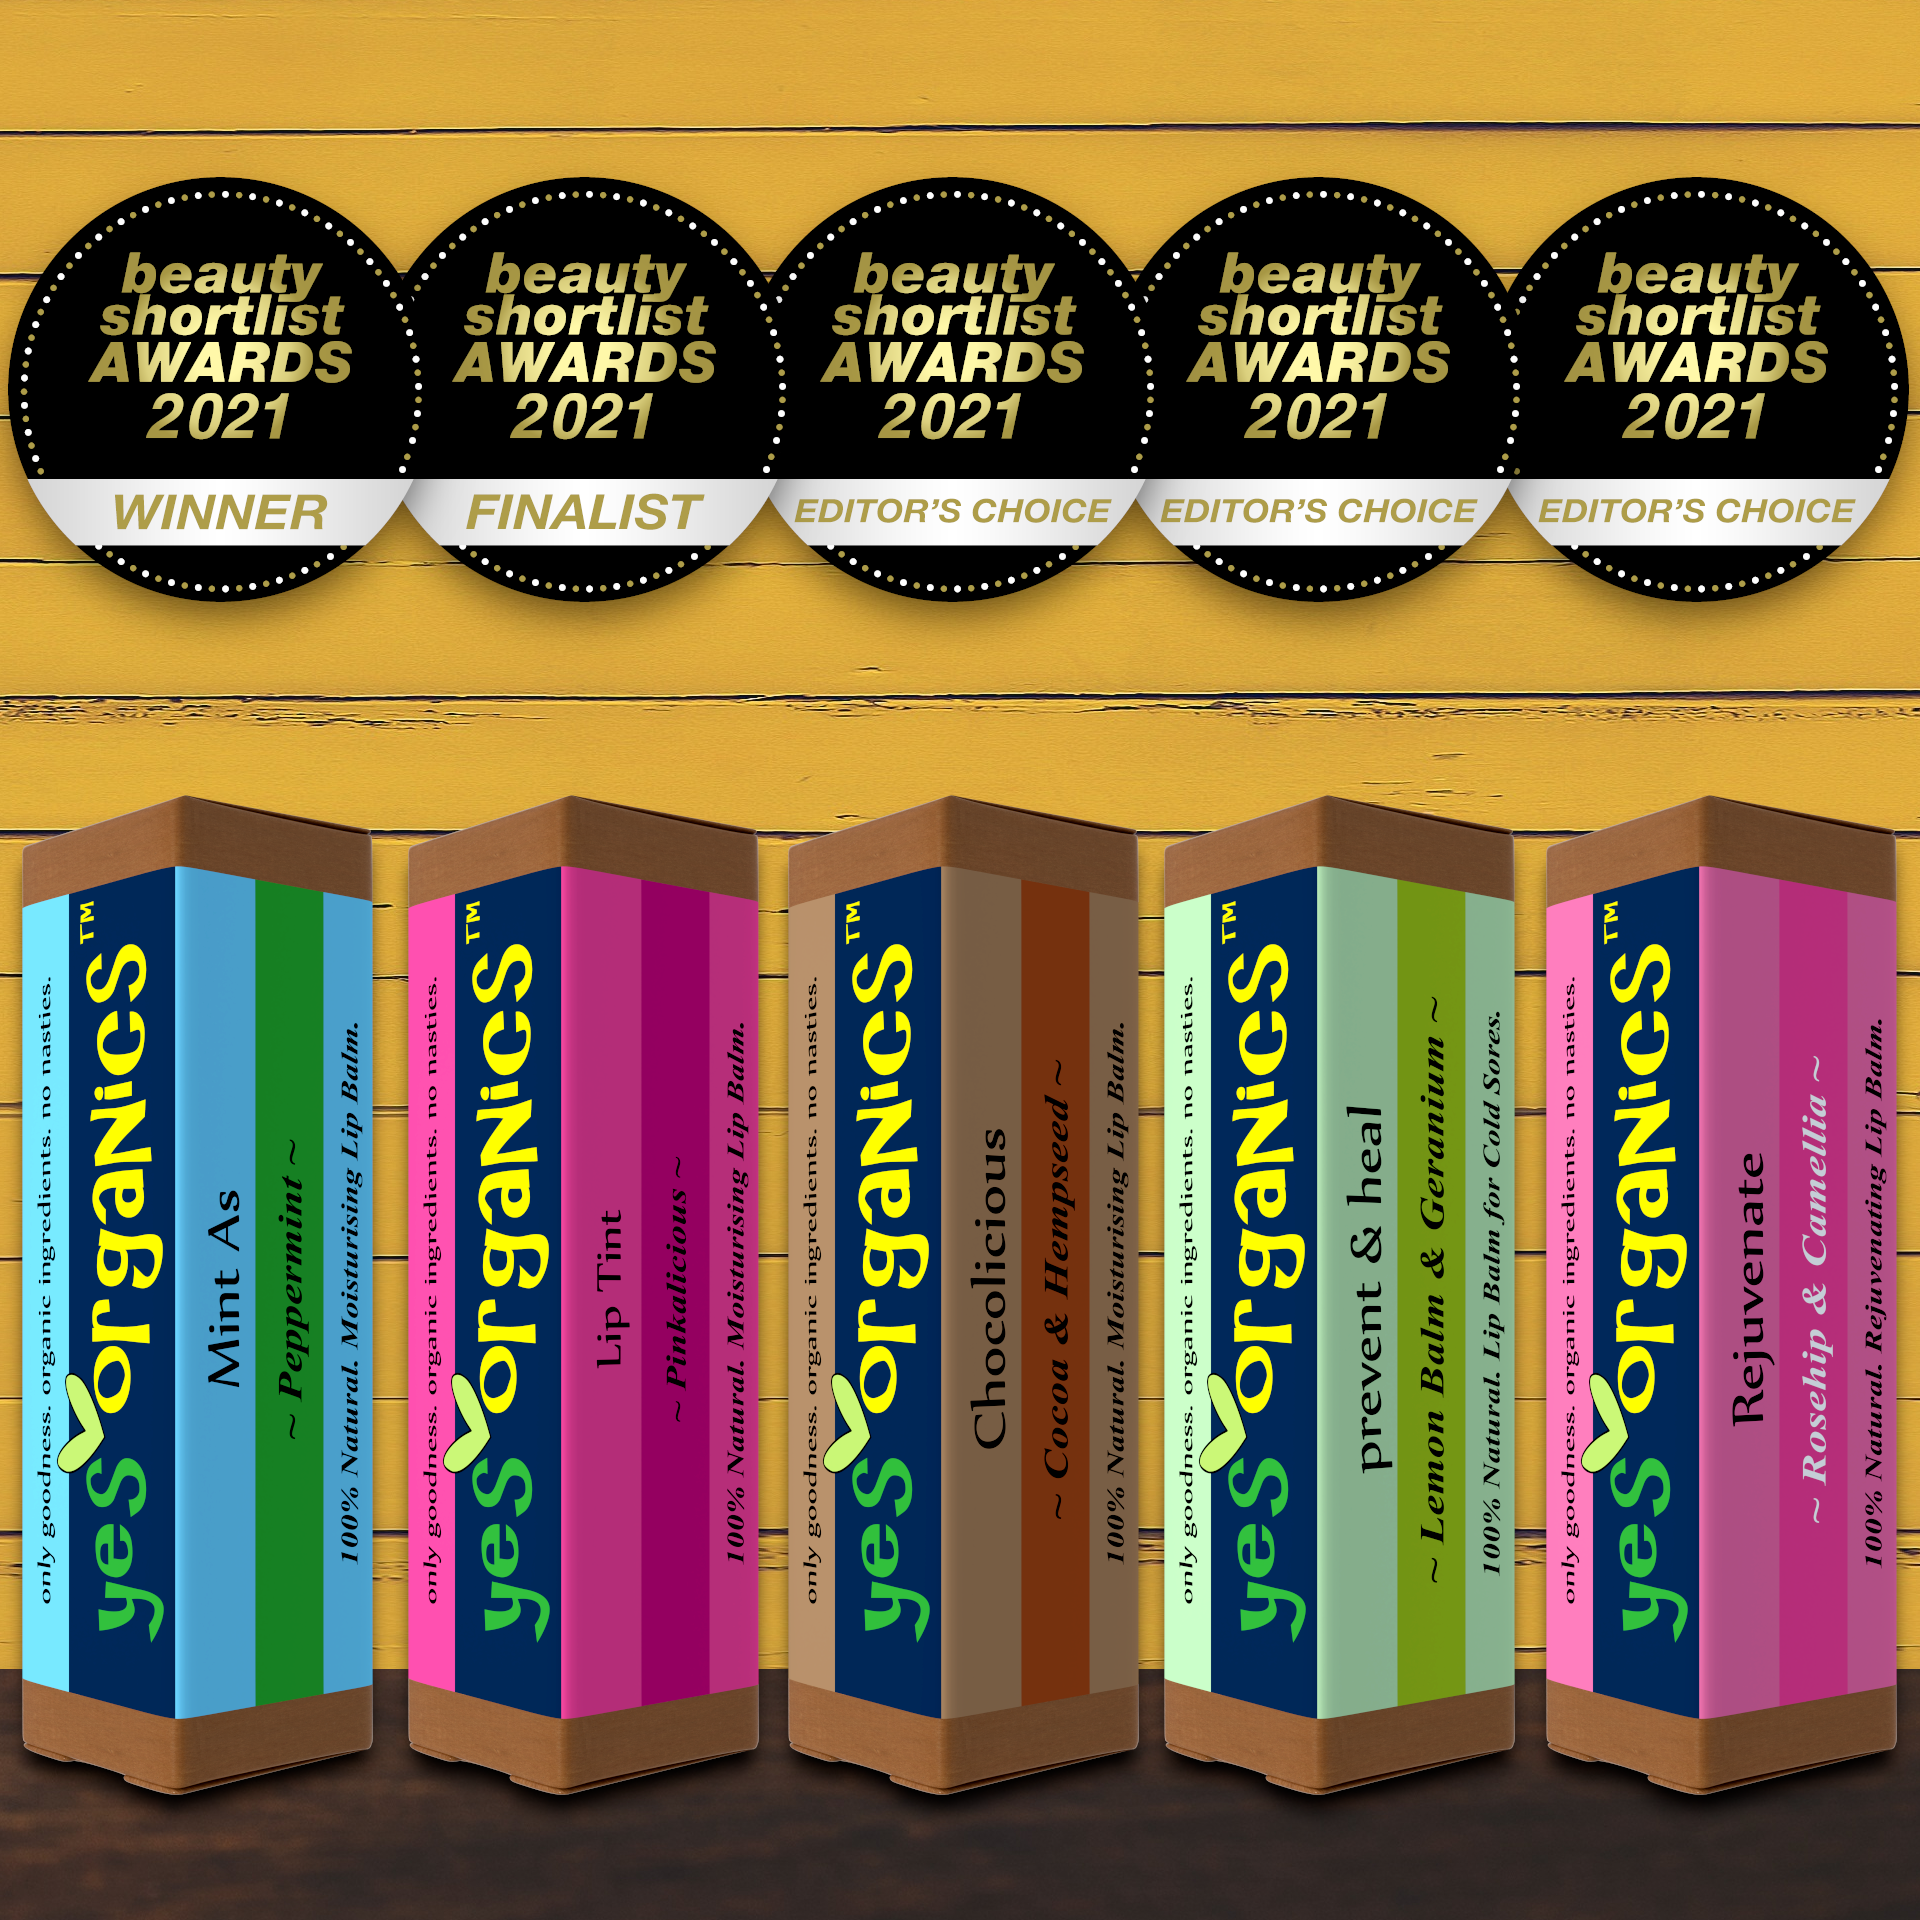 Yes Organics Wins Best Lip Balm & Best Lip Tint Awards in The Beauty Shortlist Awards 2021